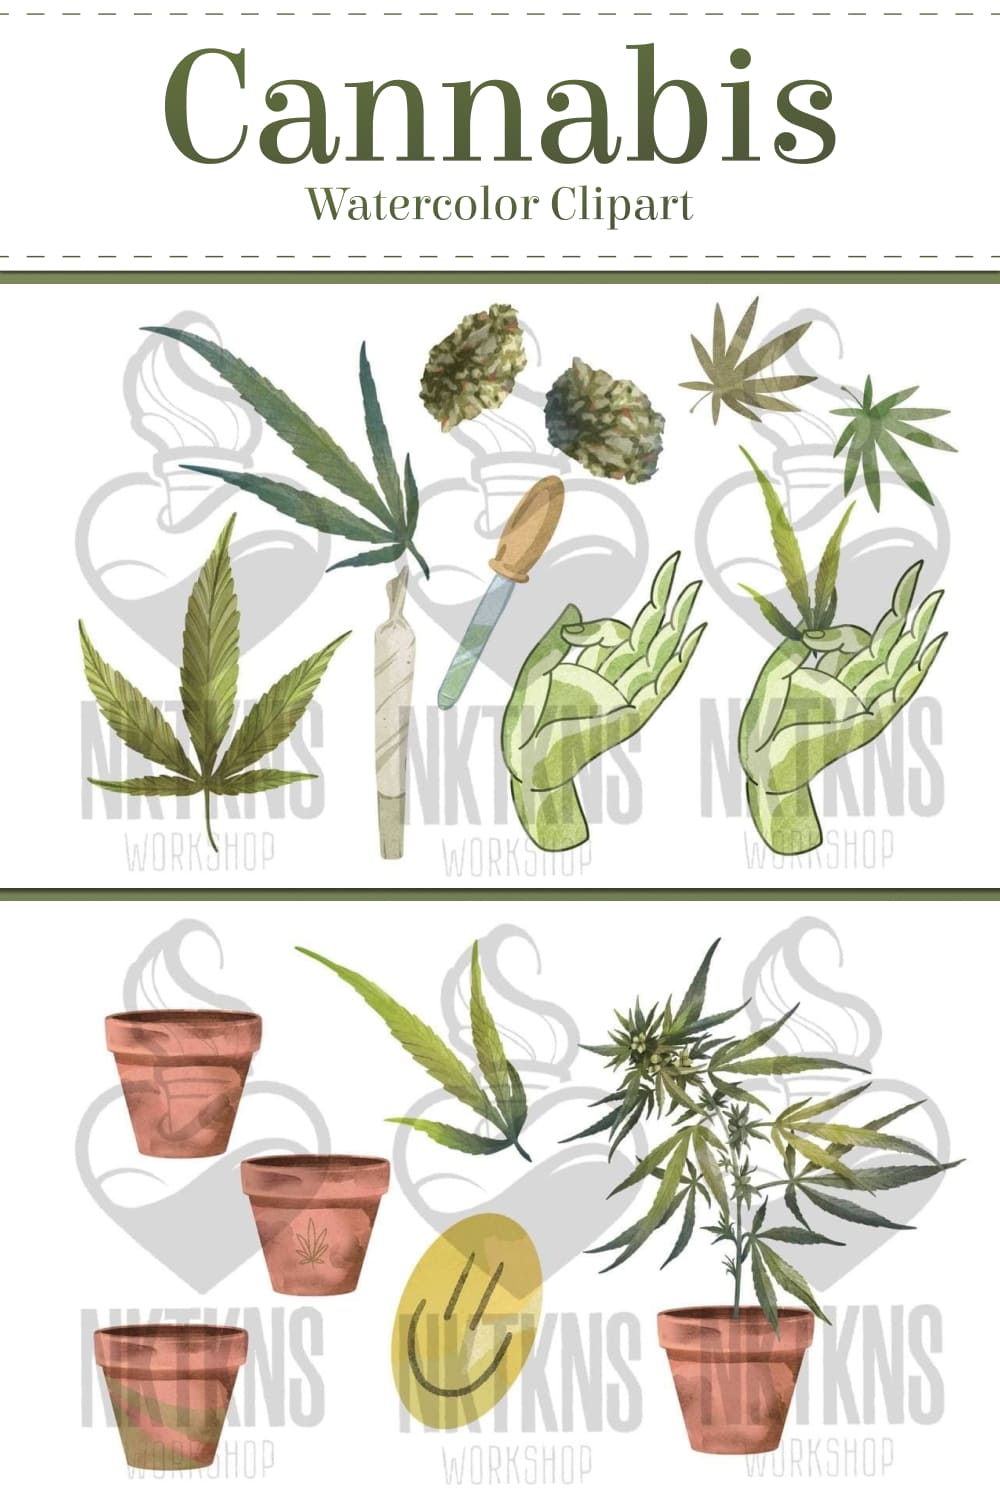 Watercolor cannabis clipart - pinterest image preview.